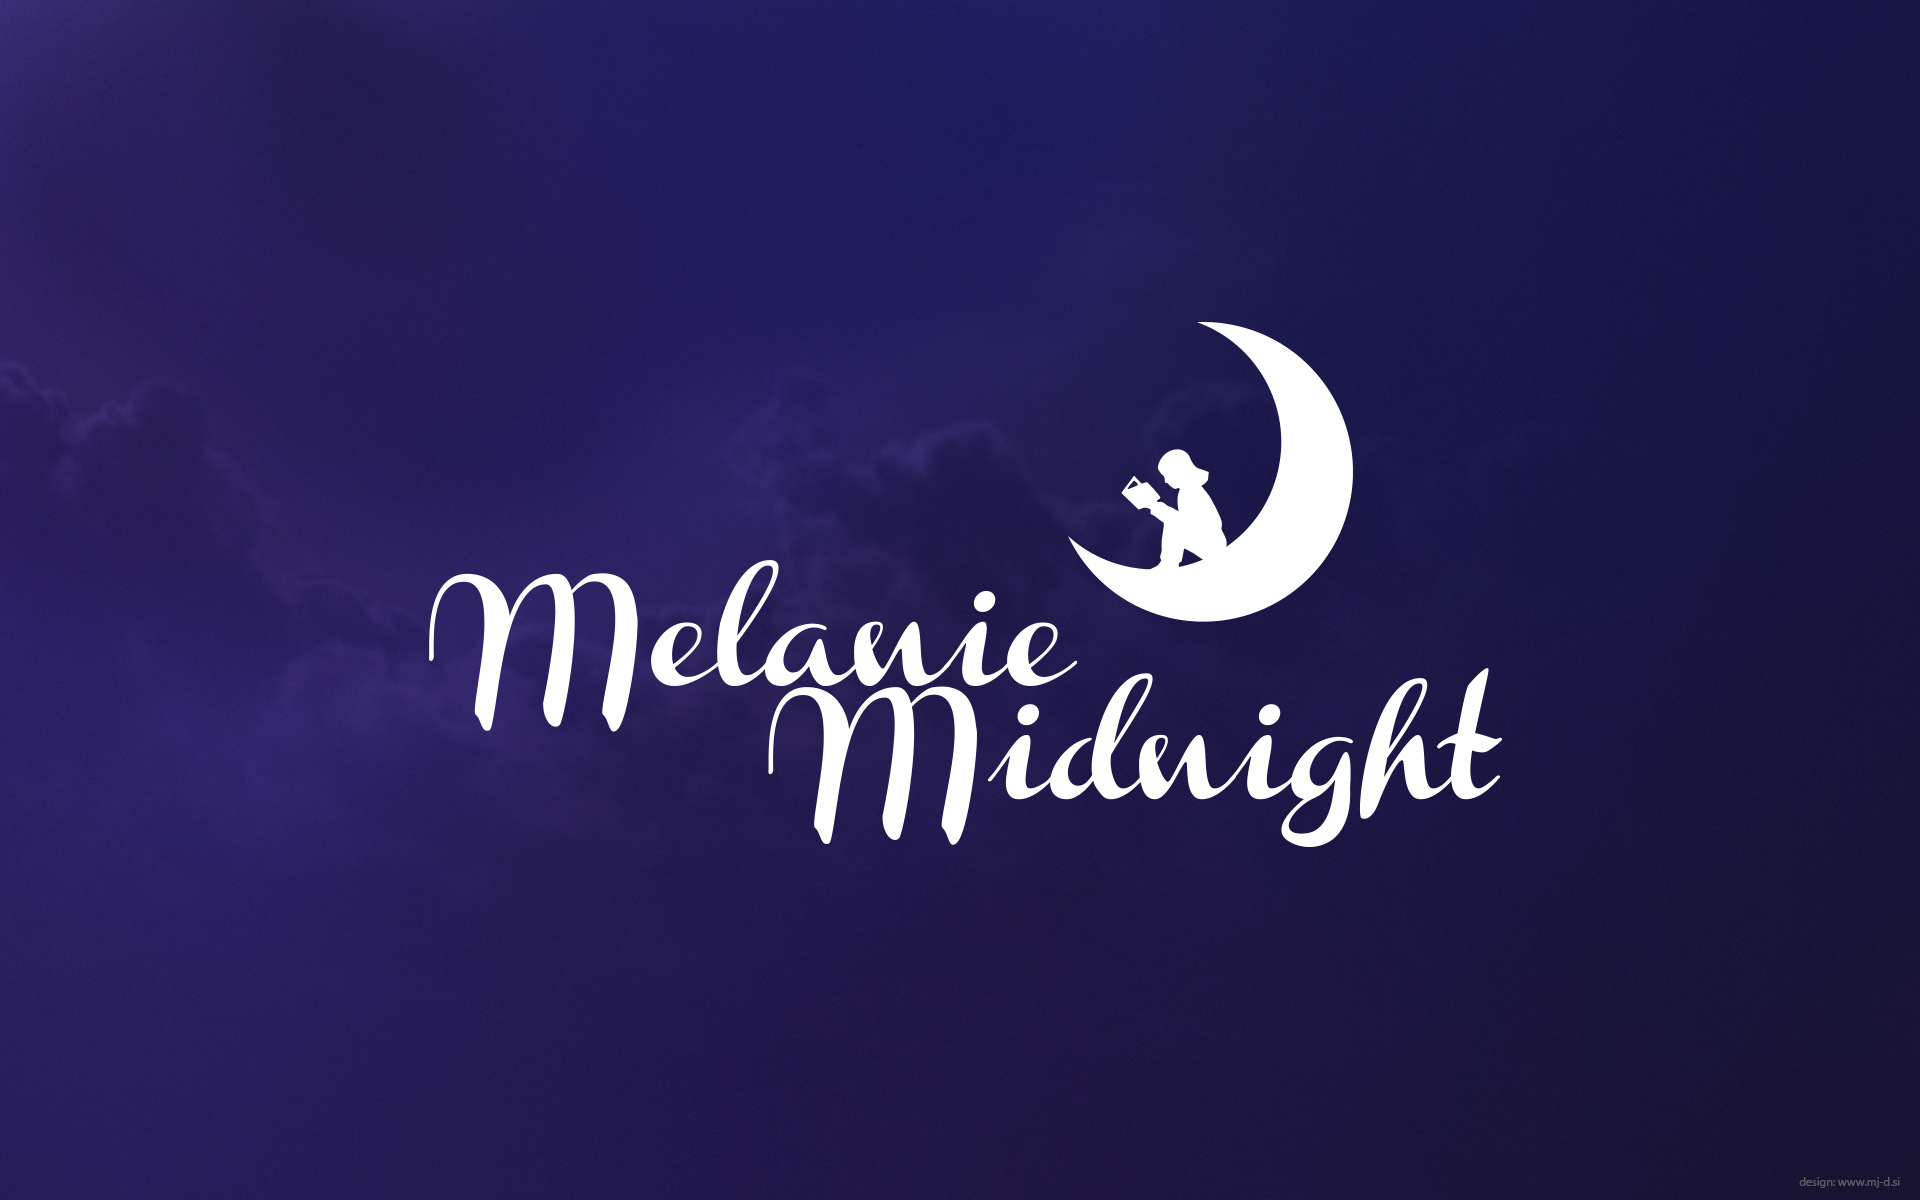 Melanie Midnight, A Logo for a blogger friend of mine, Designed by Matic Jelovčan